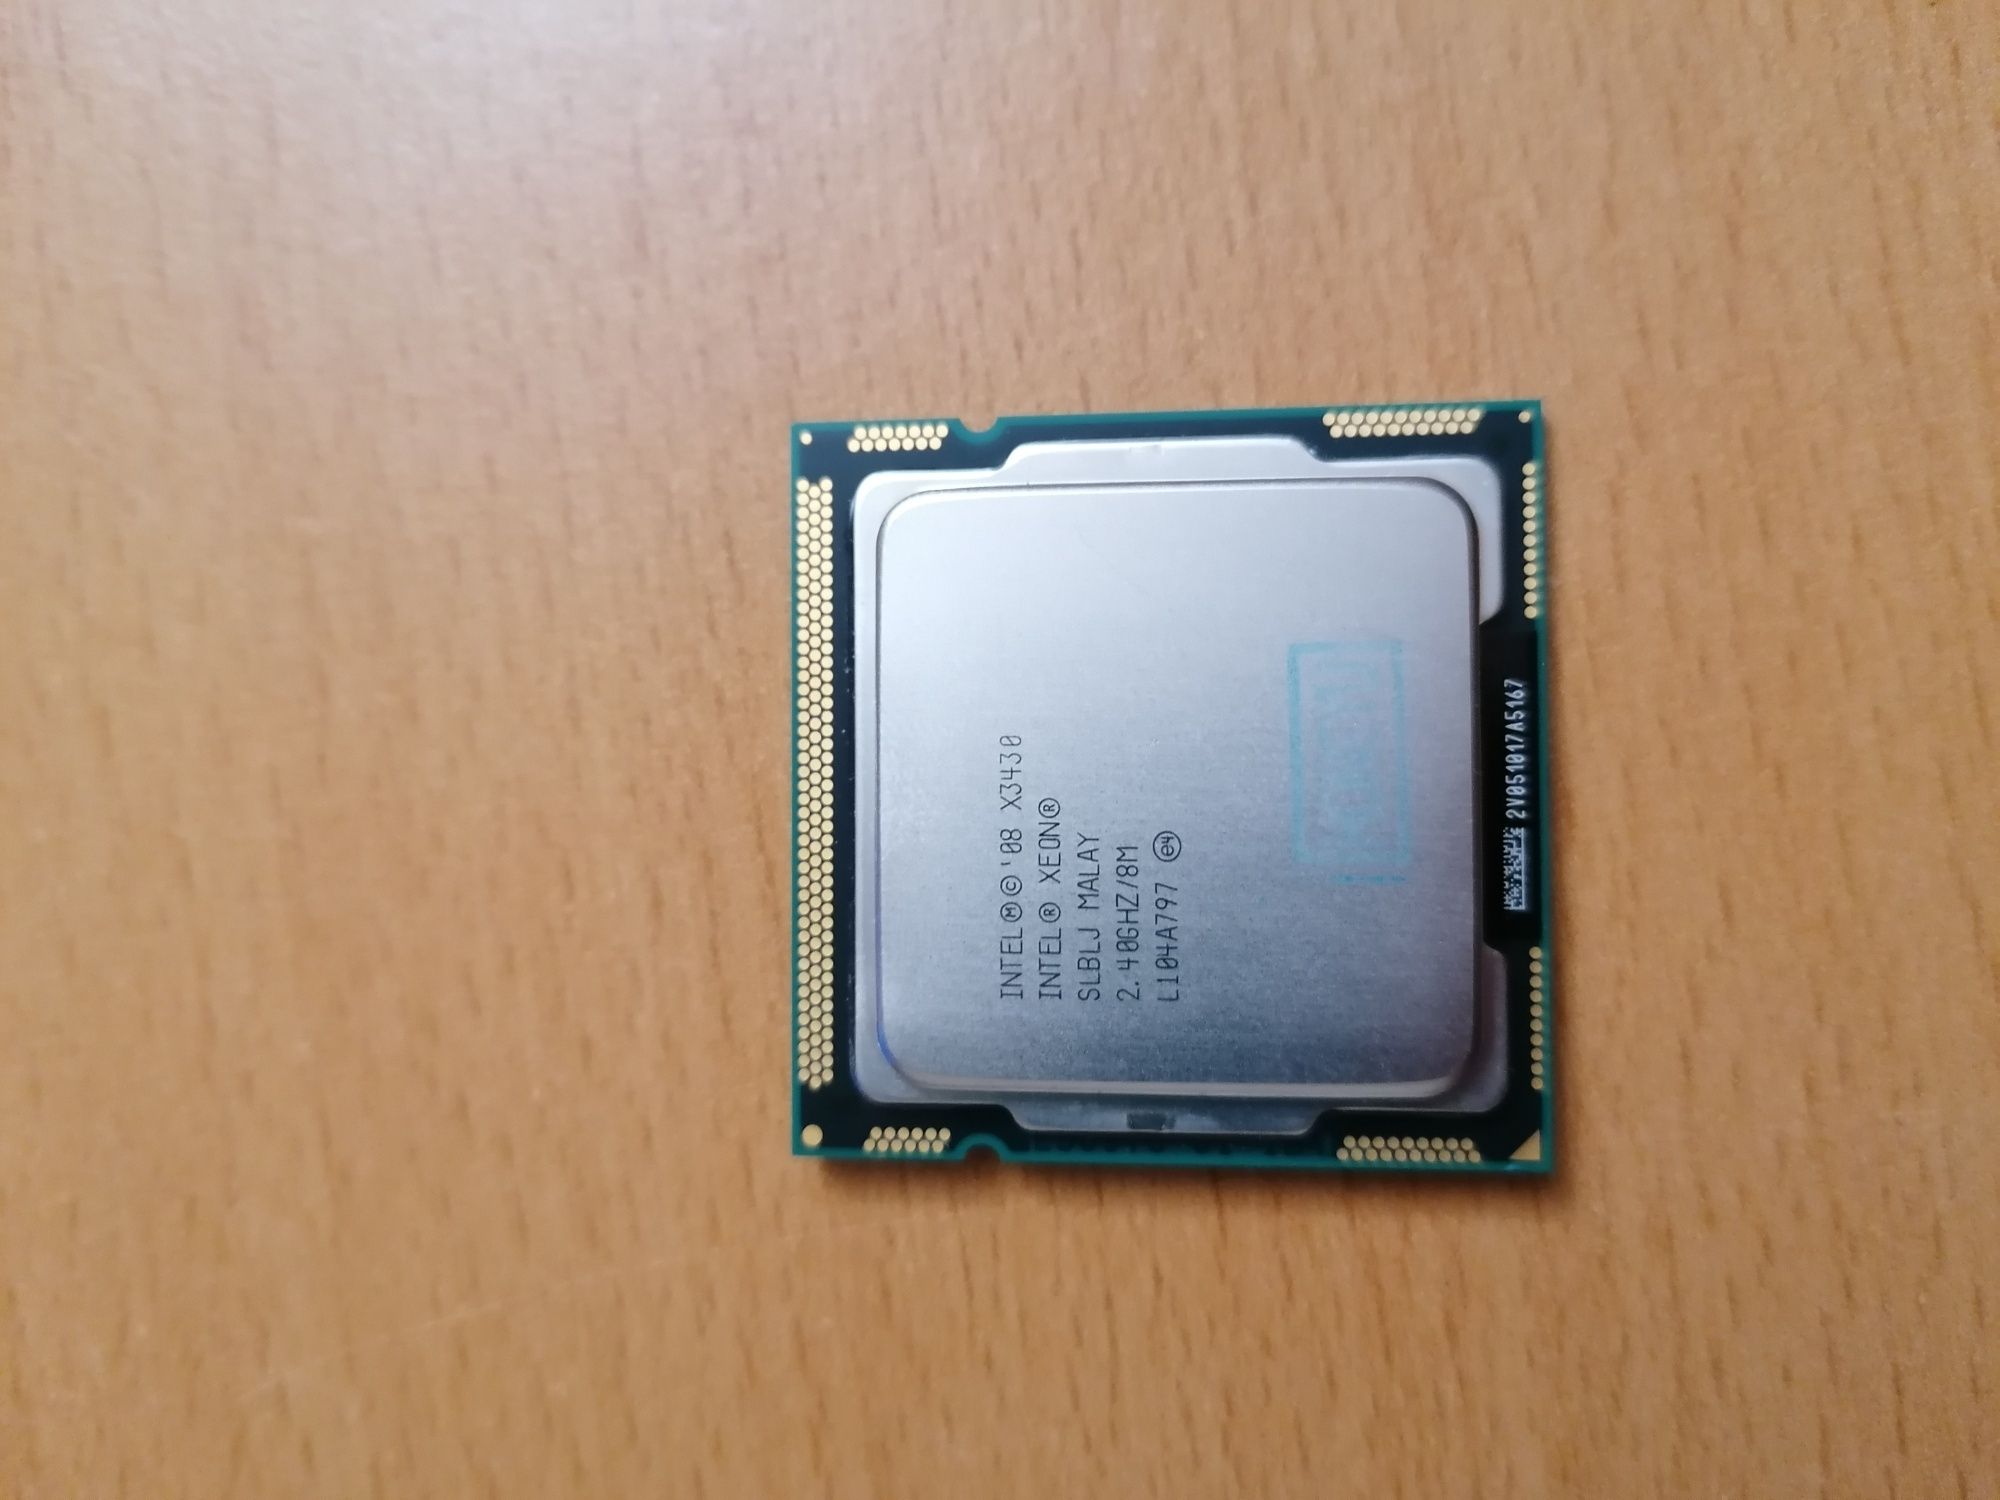 Processador Xeon x3430 lga 1156